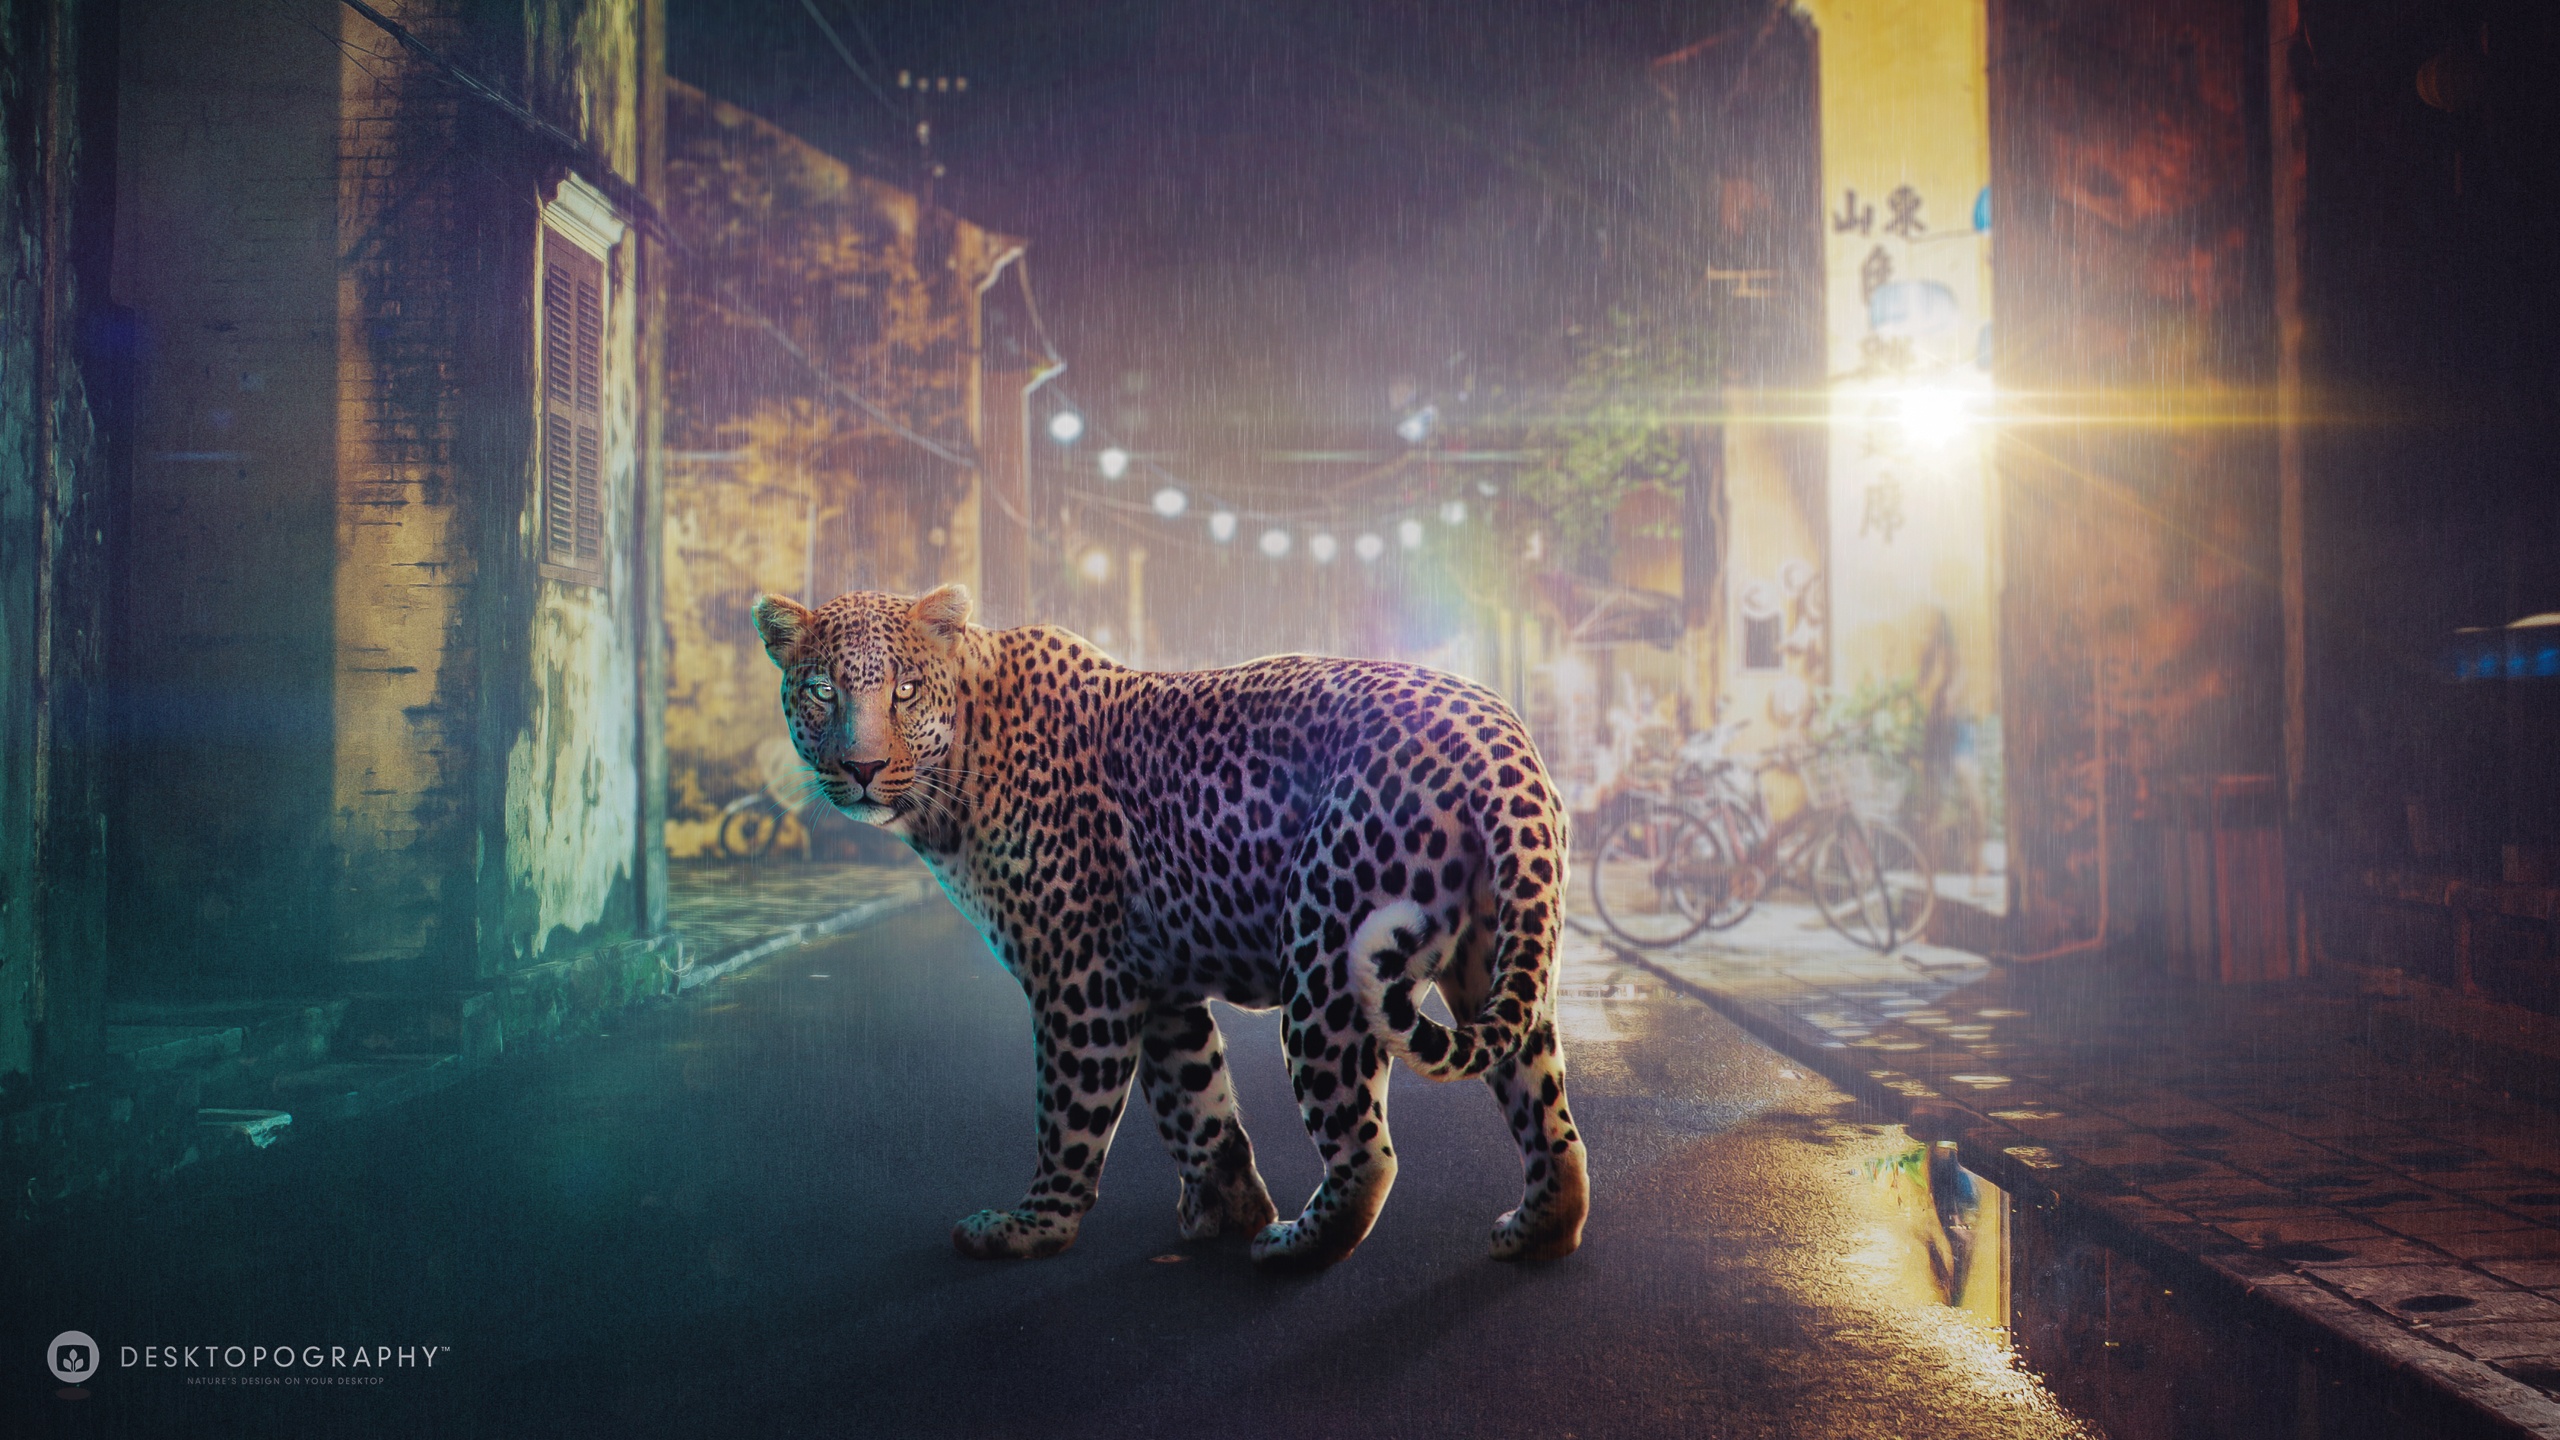 artistic, desktopography, leopard 2160p